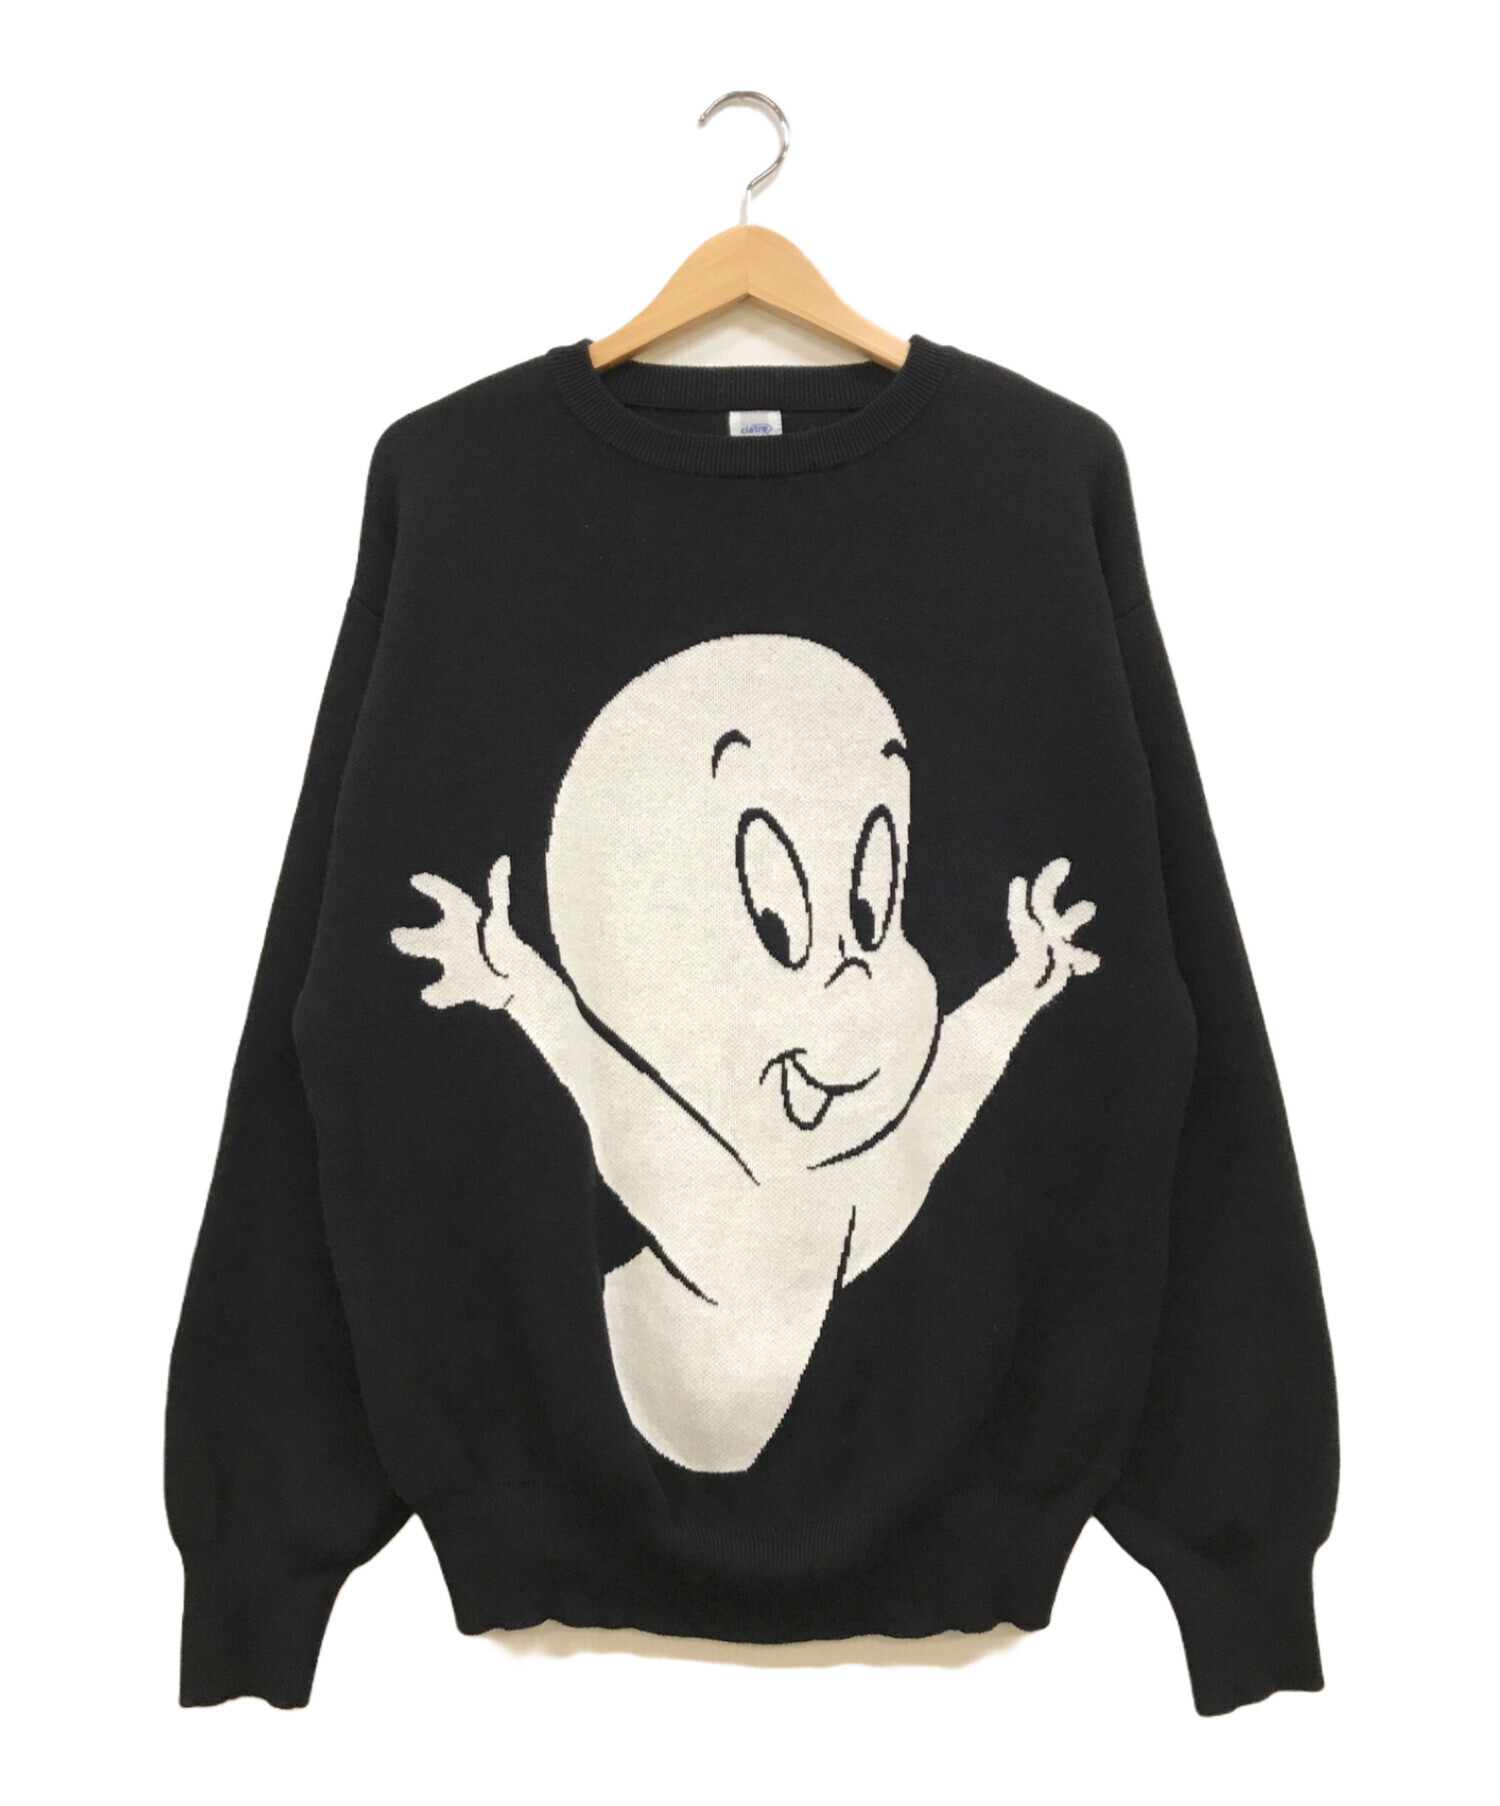 7,400円ciatre casper sweater